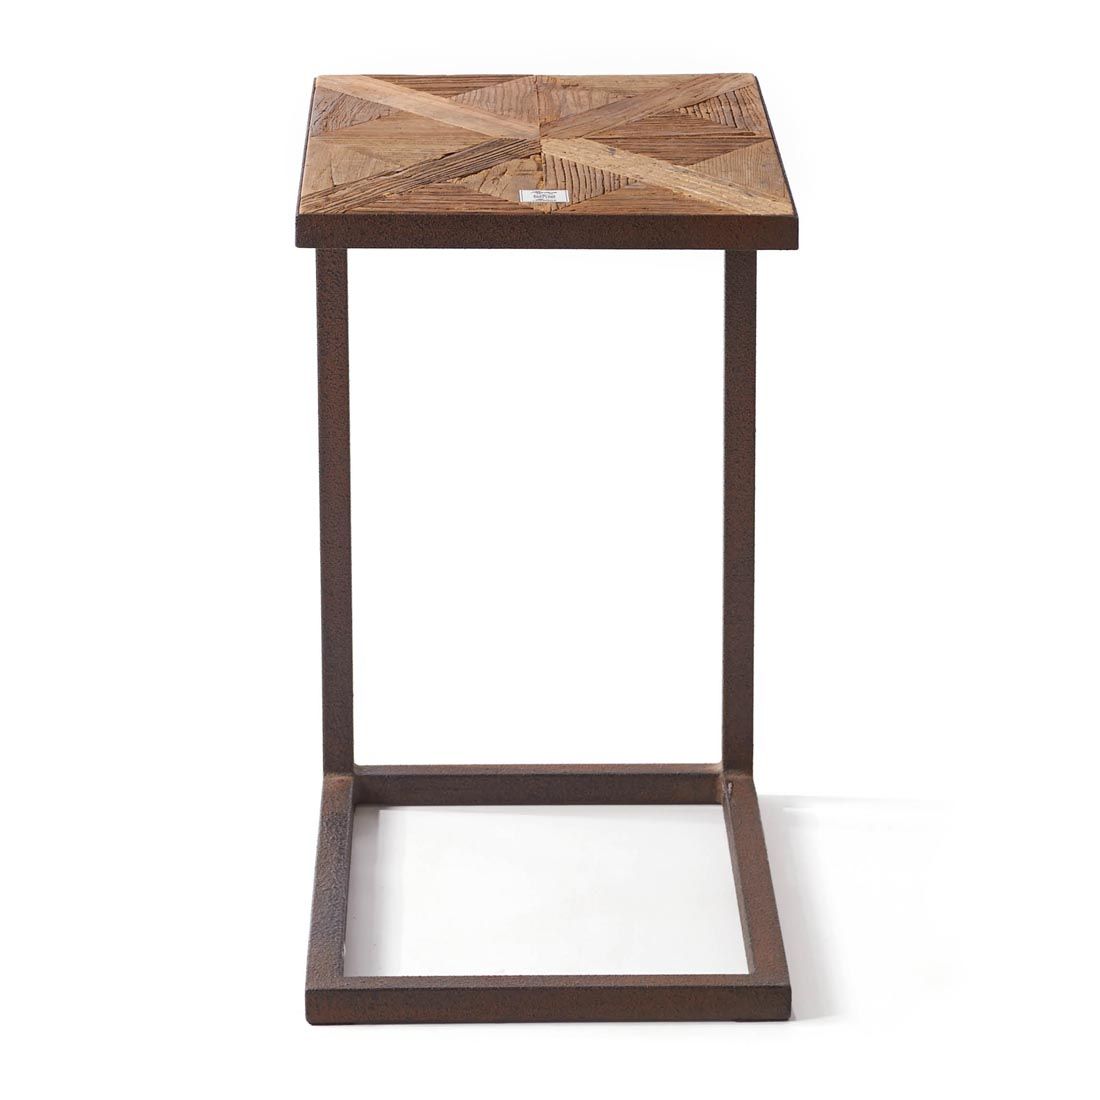 Idcollect. Приставной столик 30-45-60. Столик приставной деревянный. Приставной столик Индия. Столик приставной высота 80см.